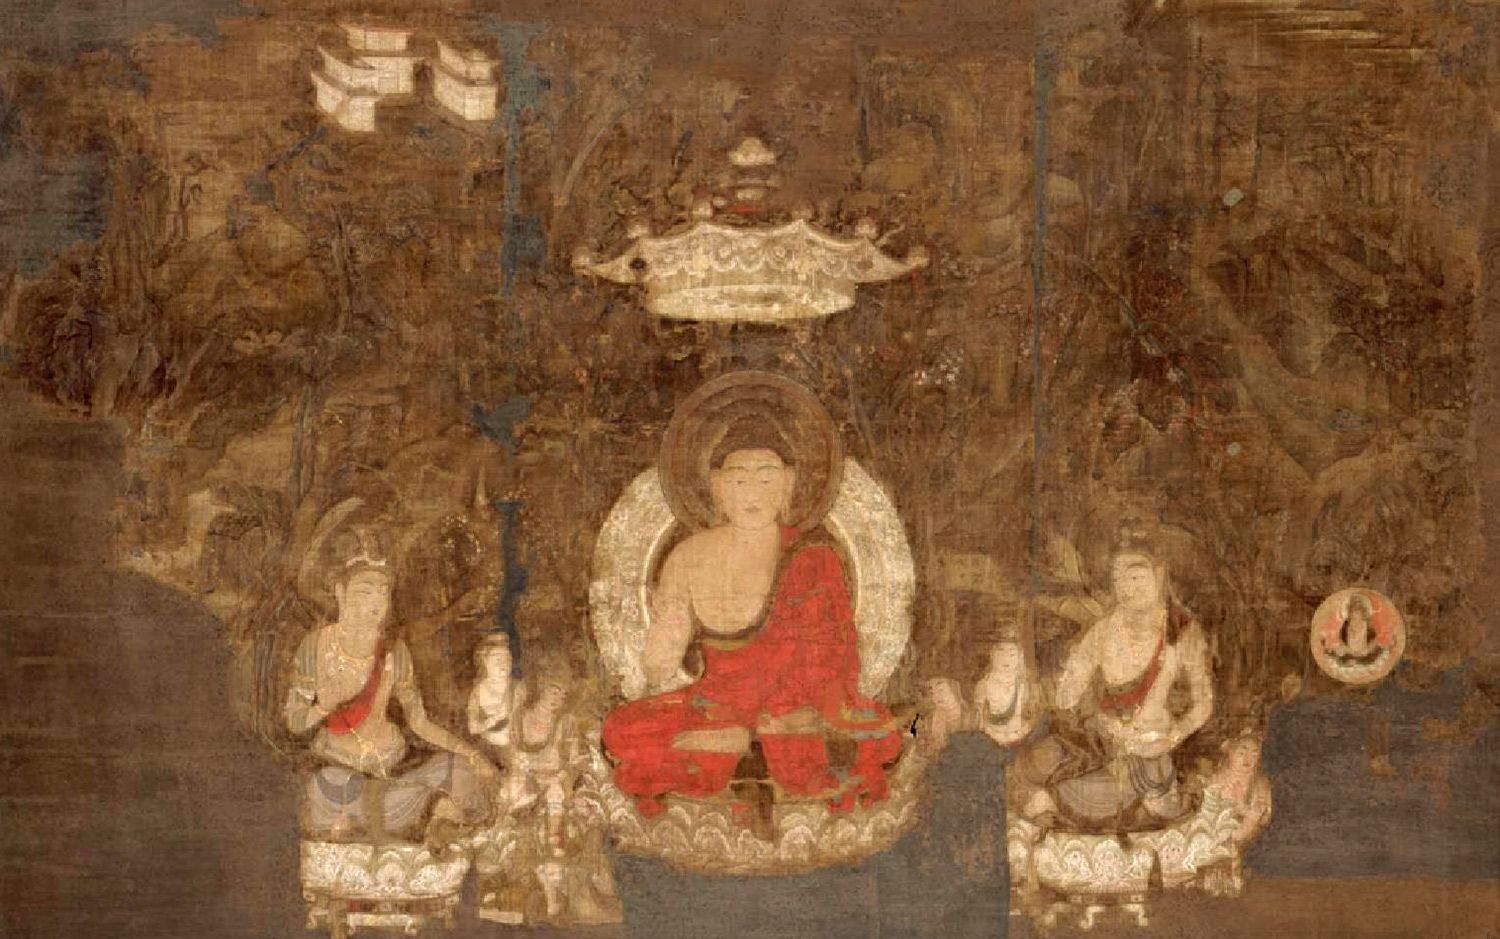 Who was the Buddha? | Aeon